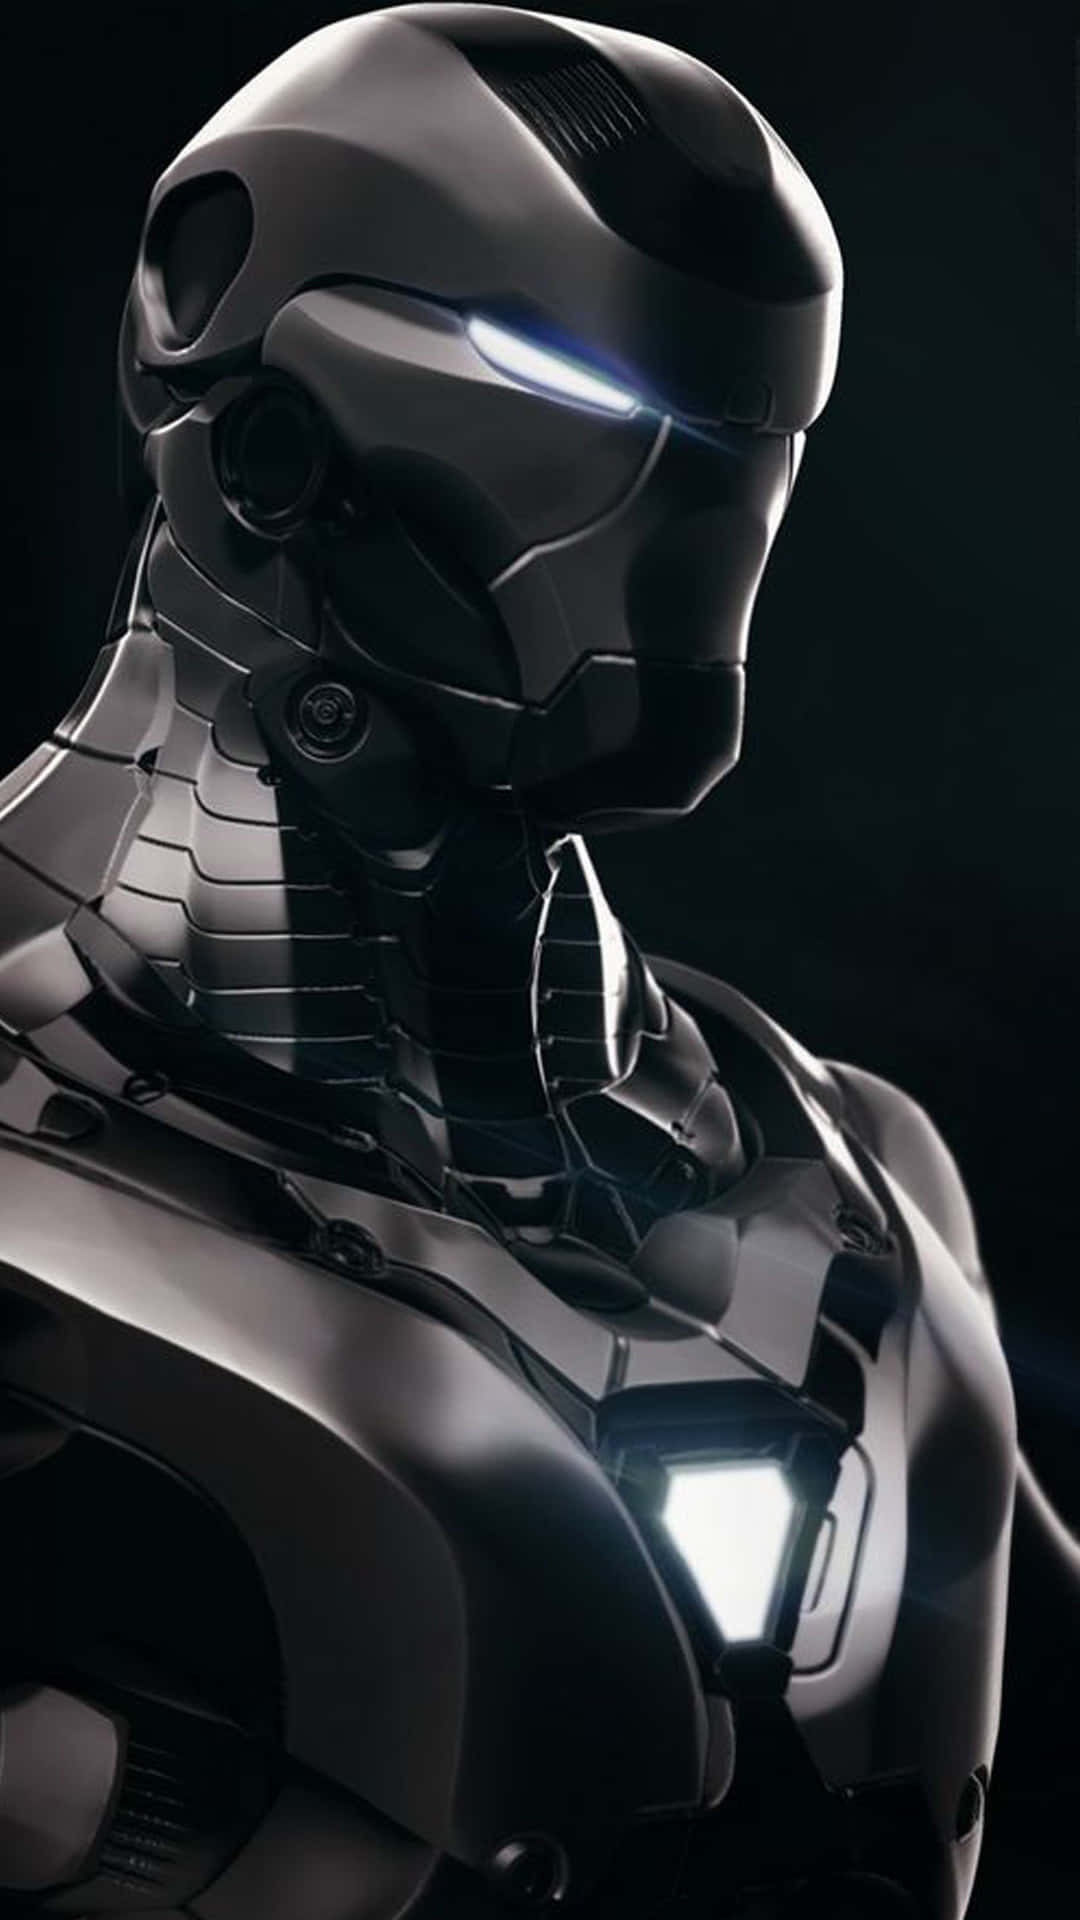 Cool Black Iron Man Close-Up Look iPhone Wallpaper